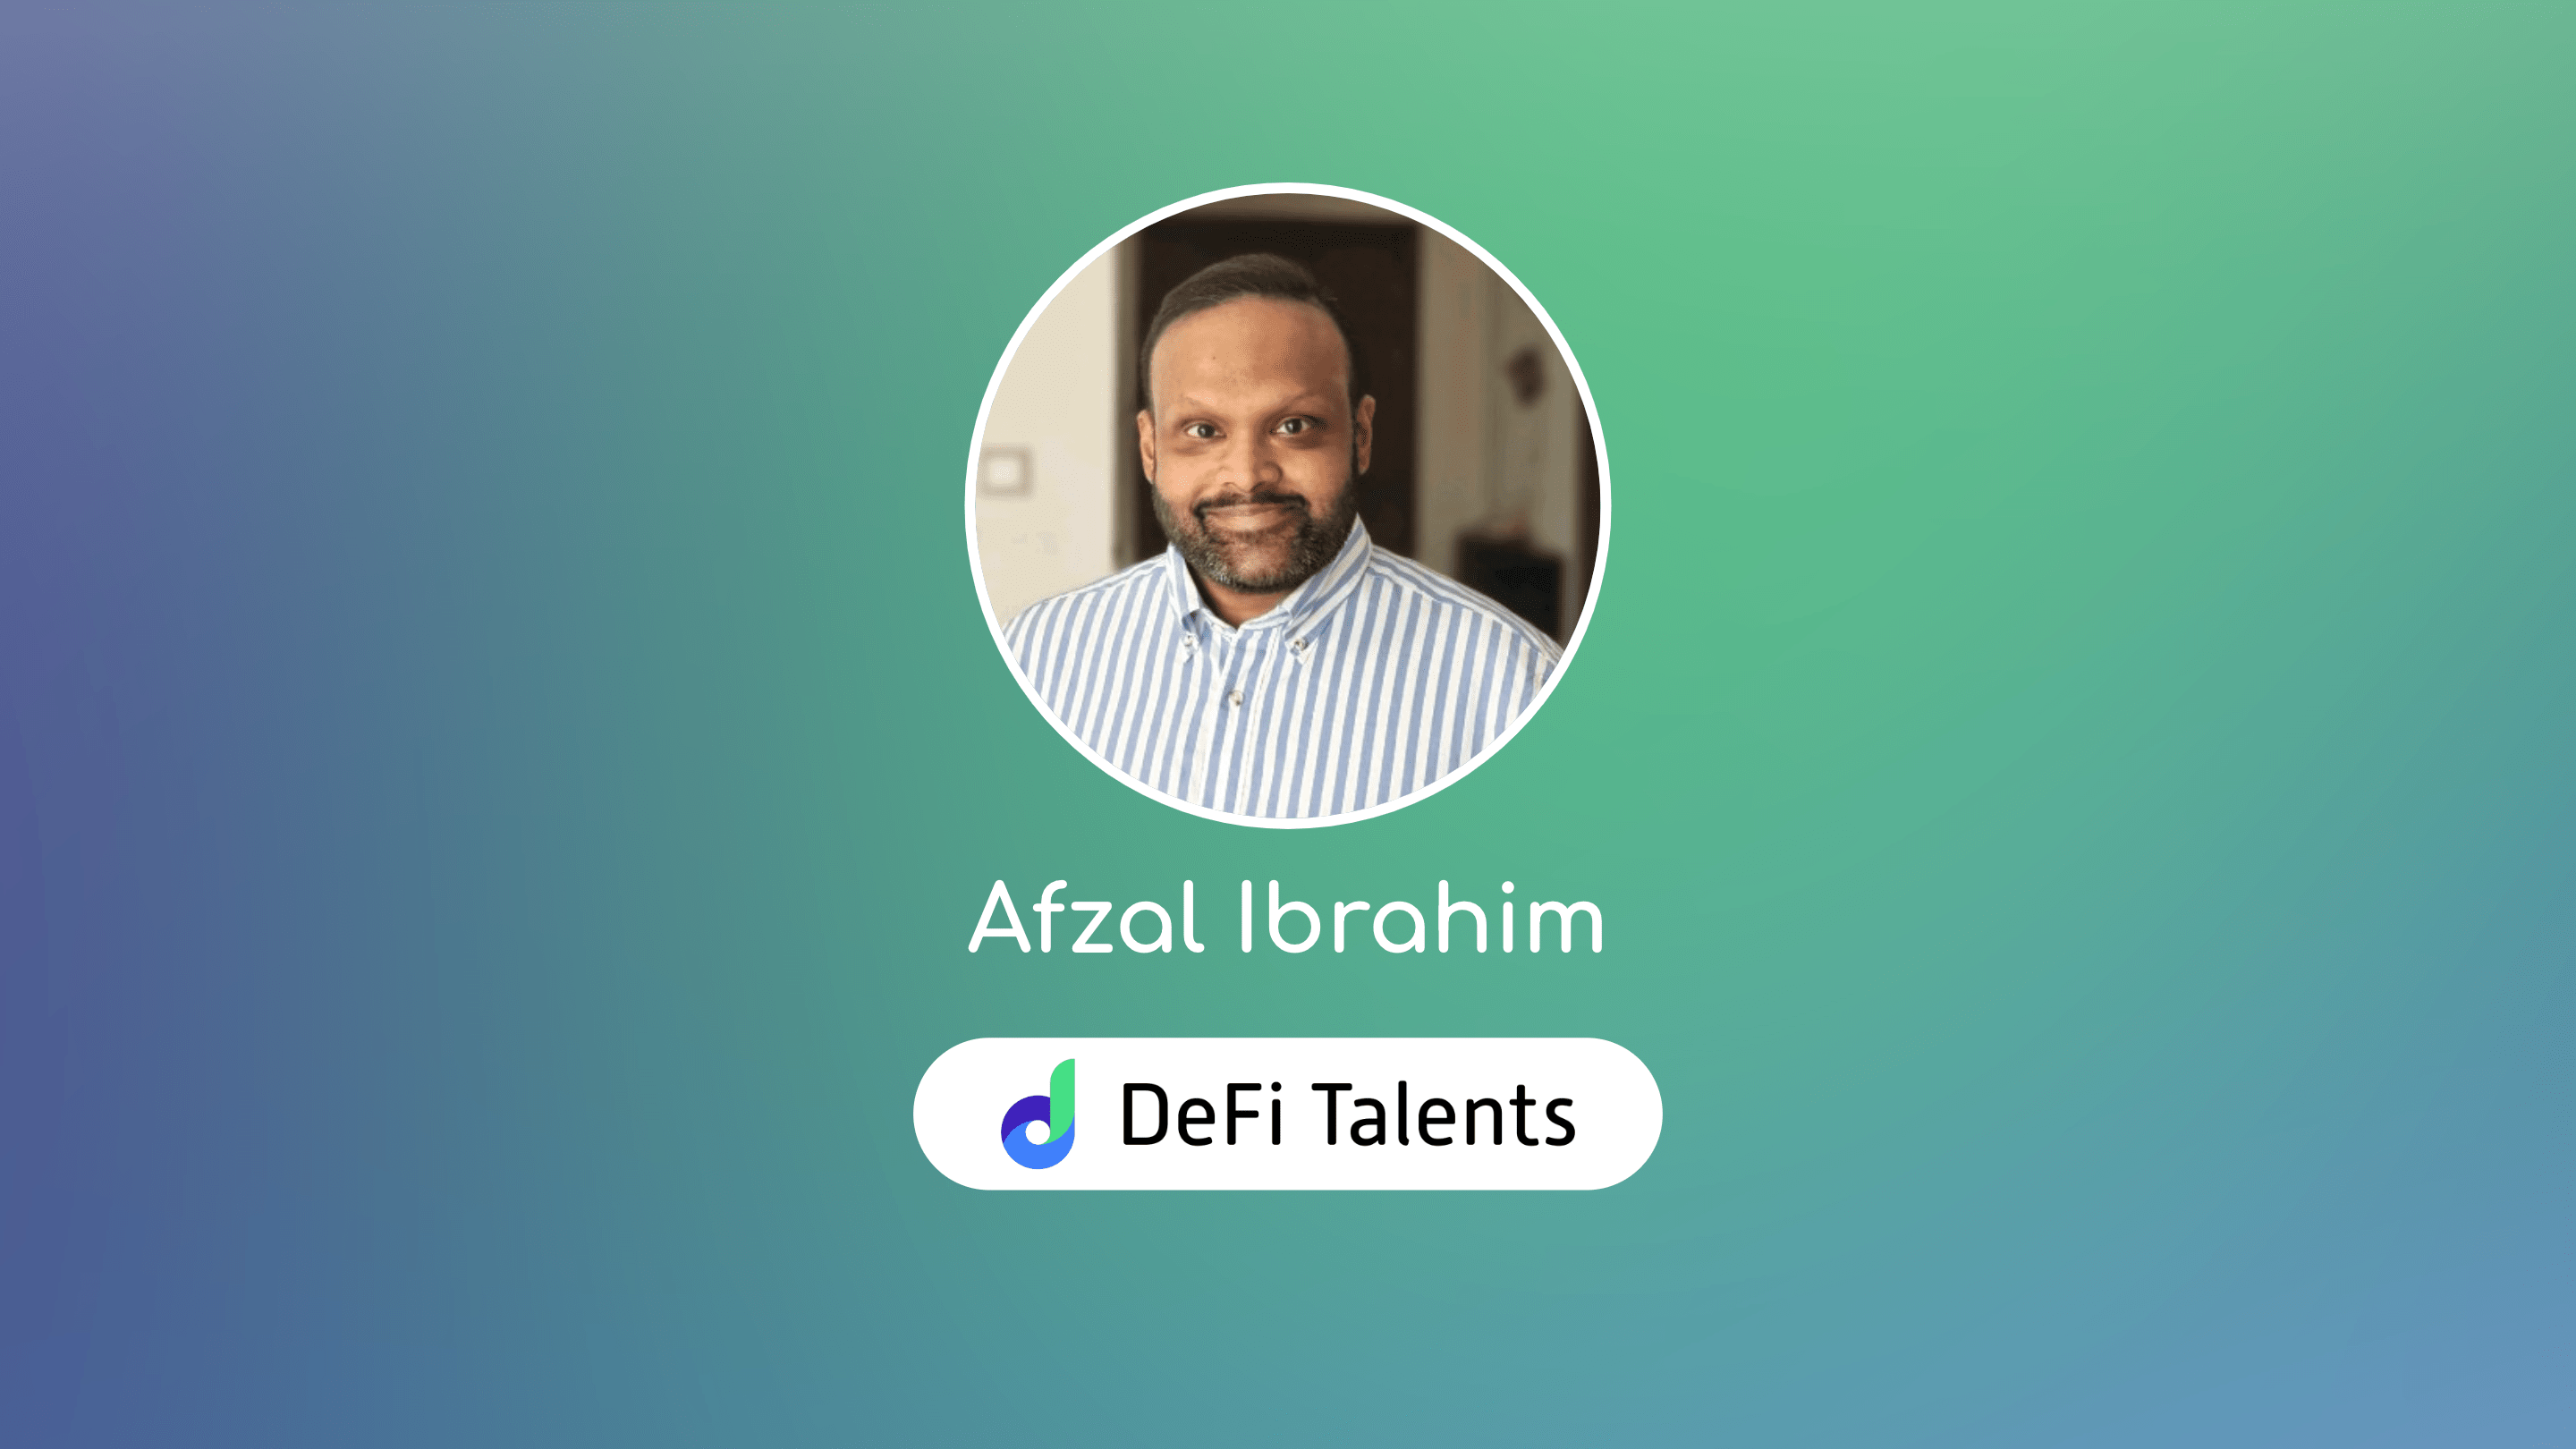 DeFi Talents Mentor – Afzal Ibrahim